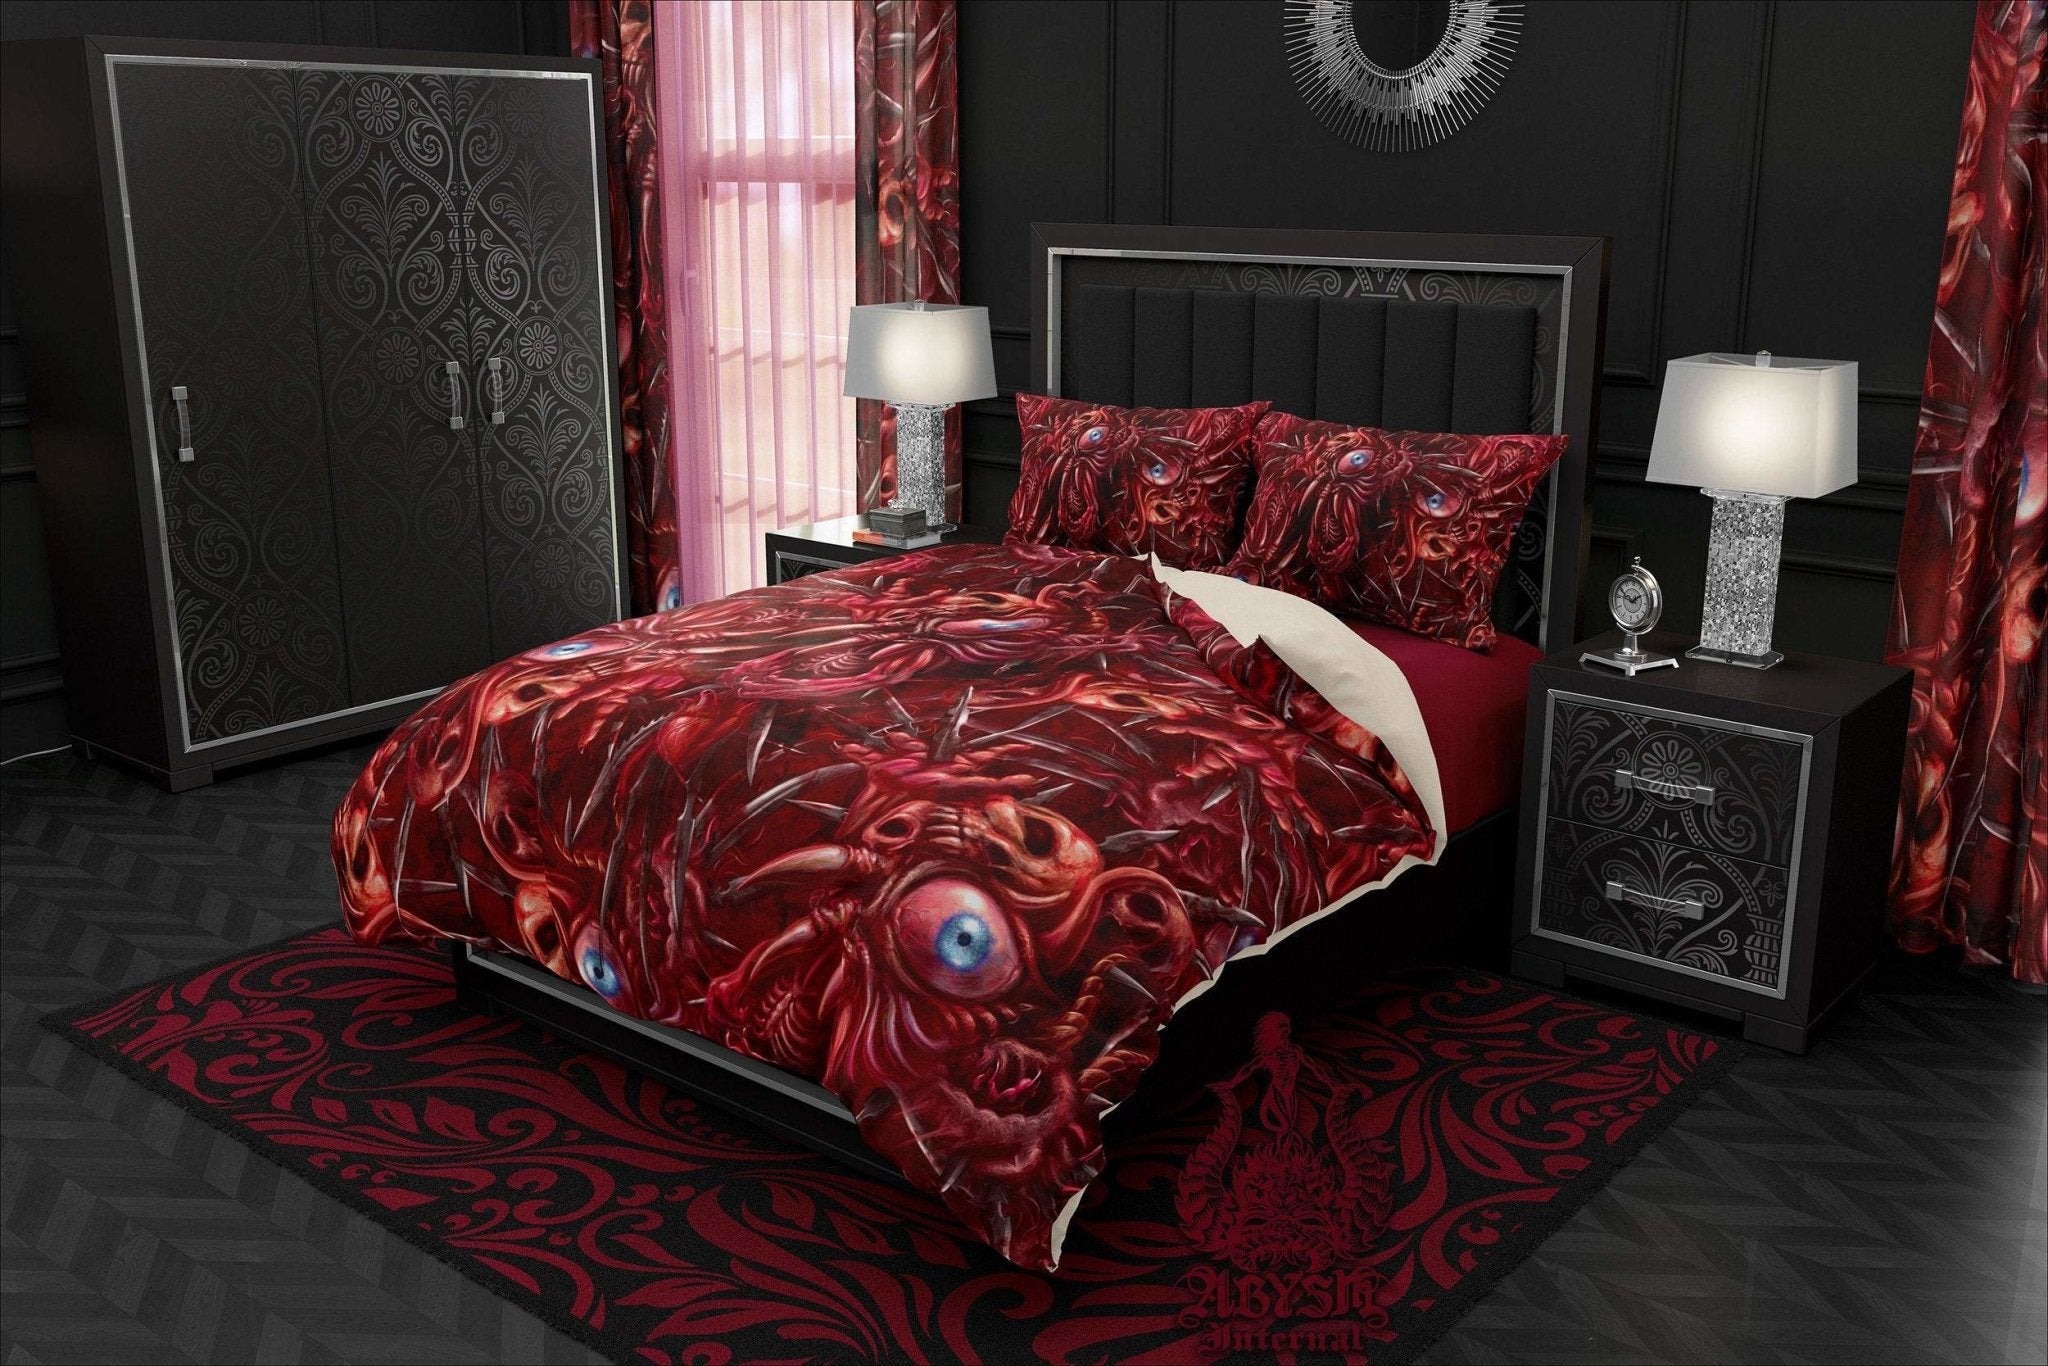 Horror Bedding Set, Comforter or Duvet, Halloween Bed Cover, Bedroom Decor,  King, Queen & Twin Size - Gore and Blood Cross